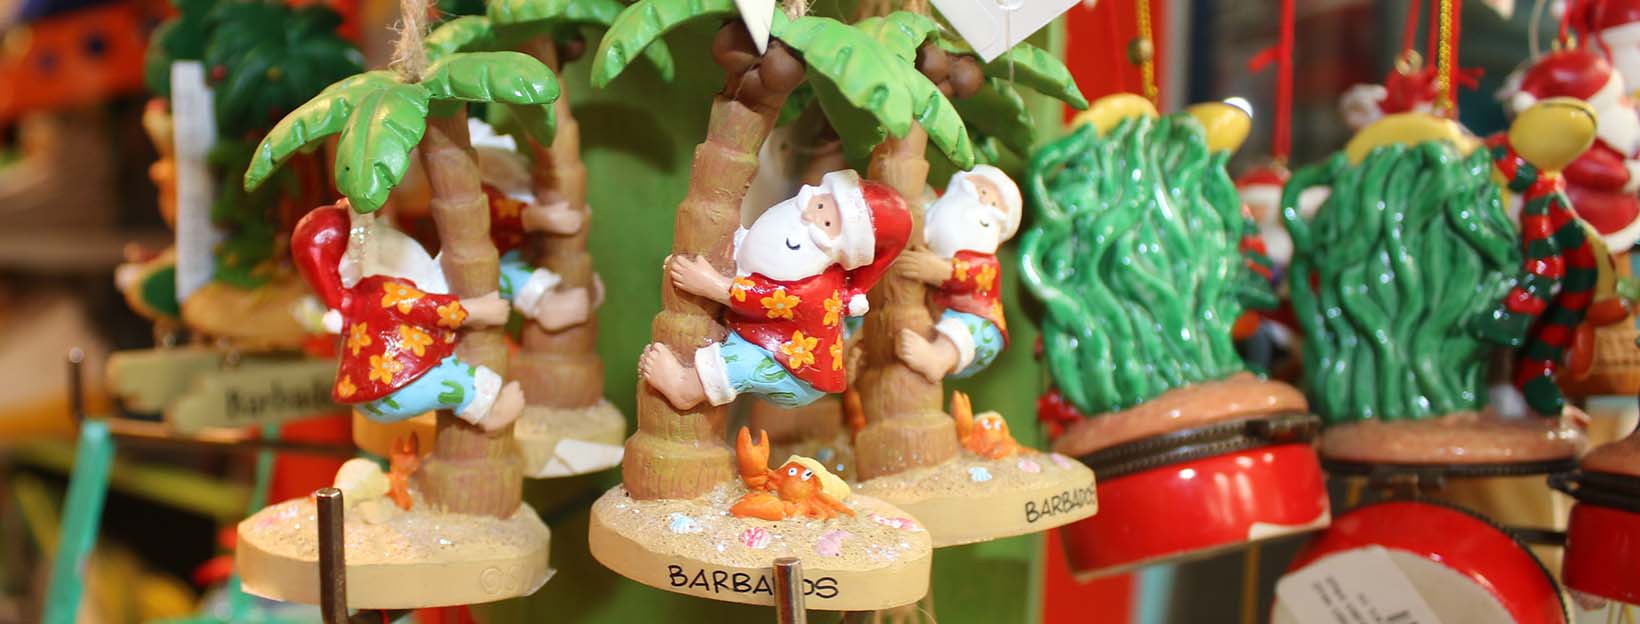 Barbados Christmas Ornaments